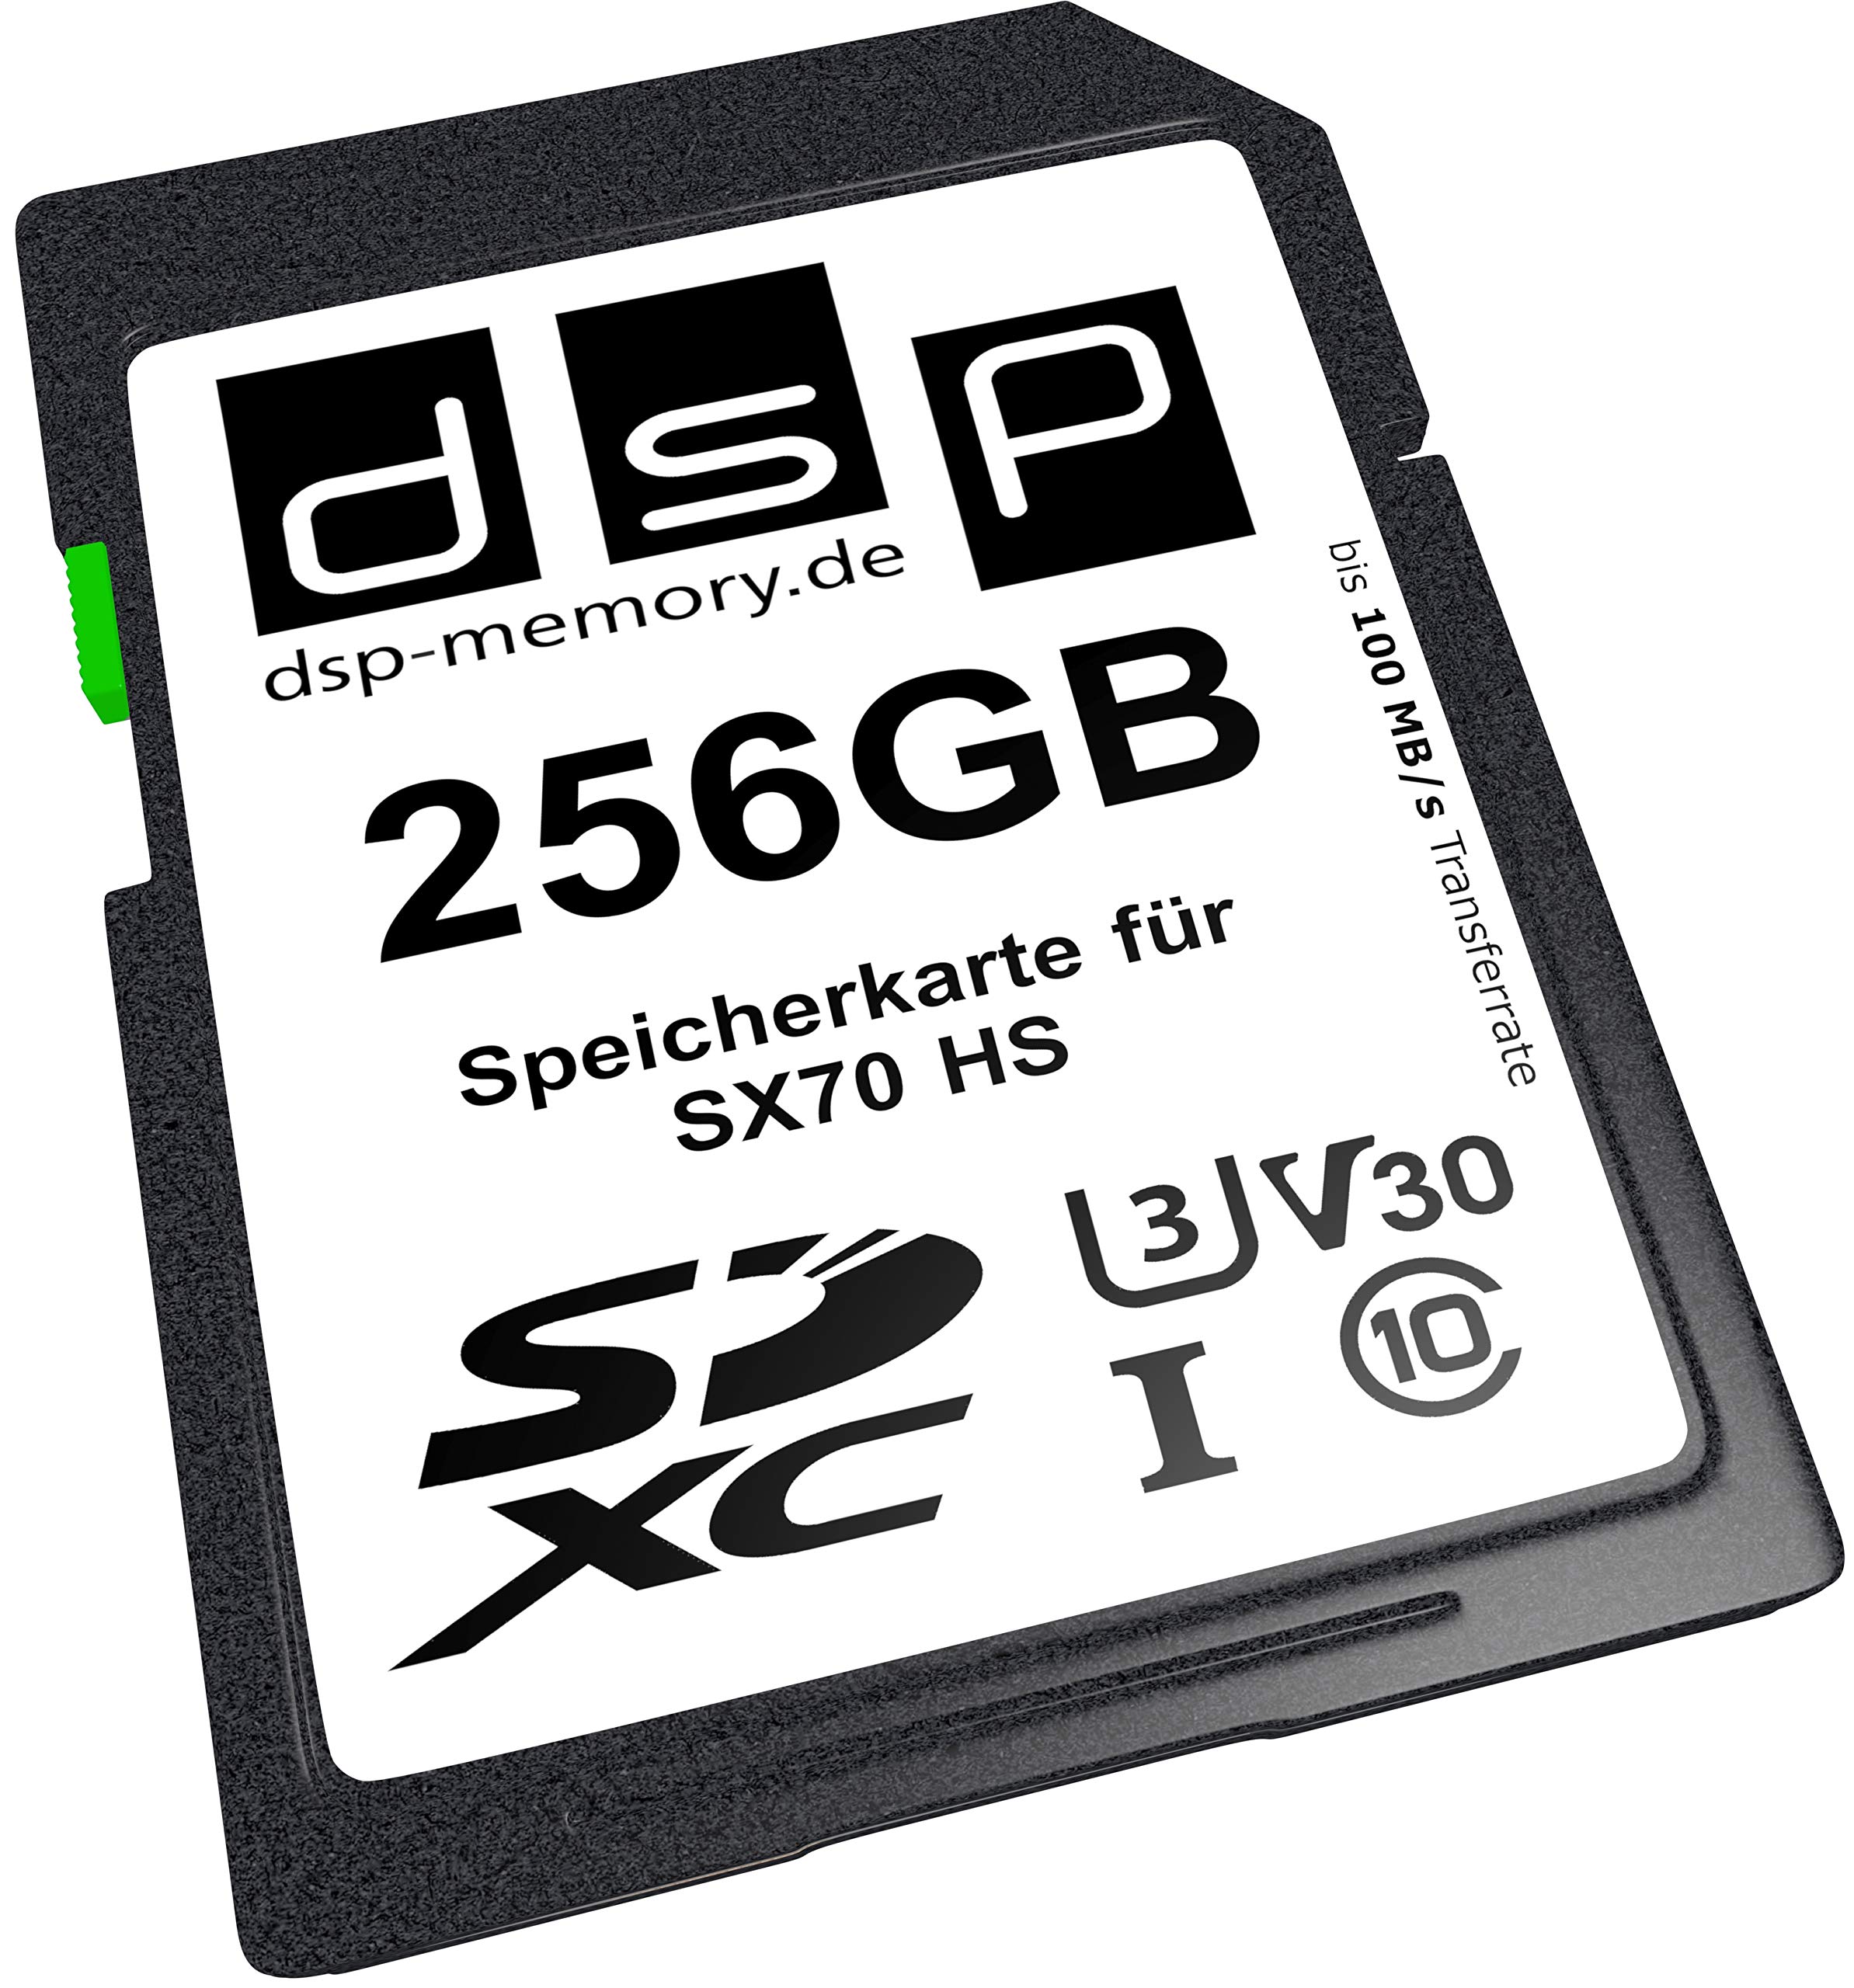 DSP Memory 256GB Professional V30 Speicherkarte für SX70 HS Digitalkamera